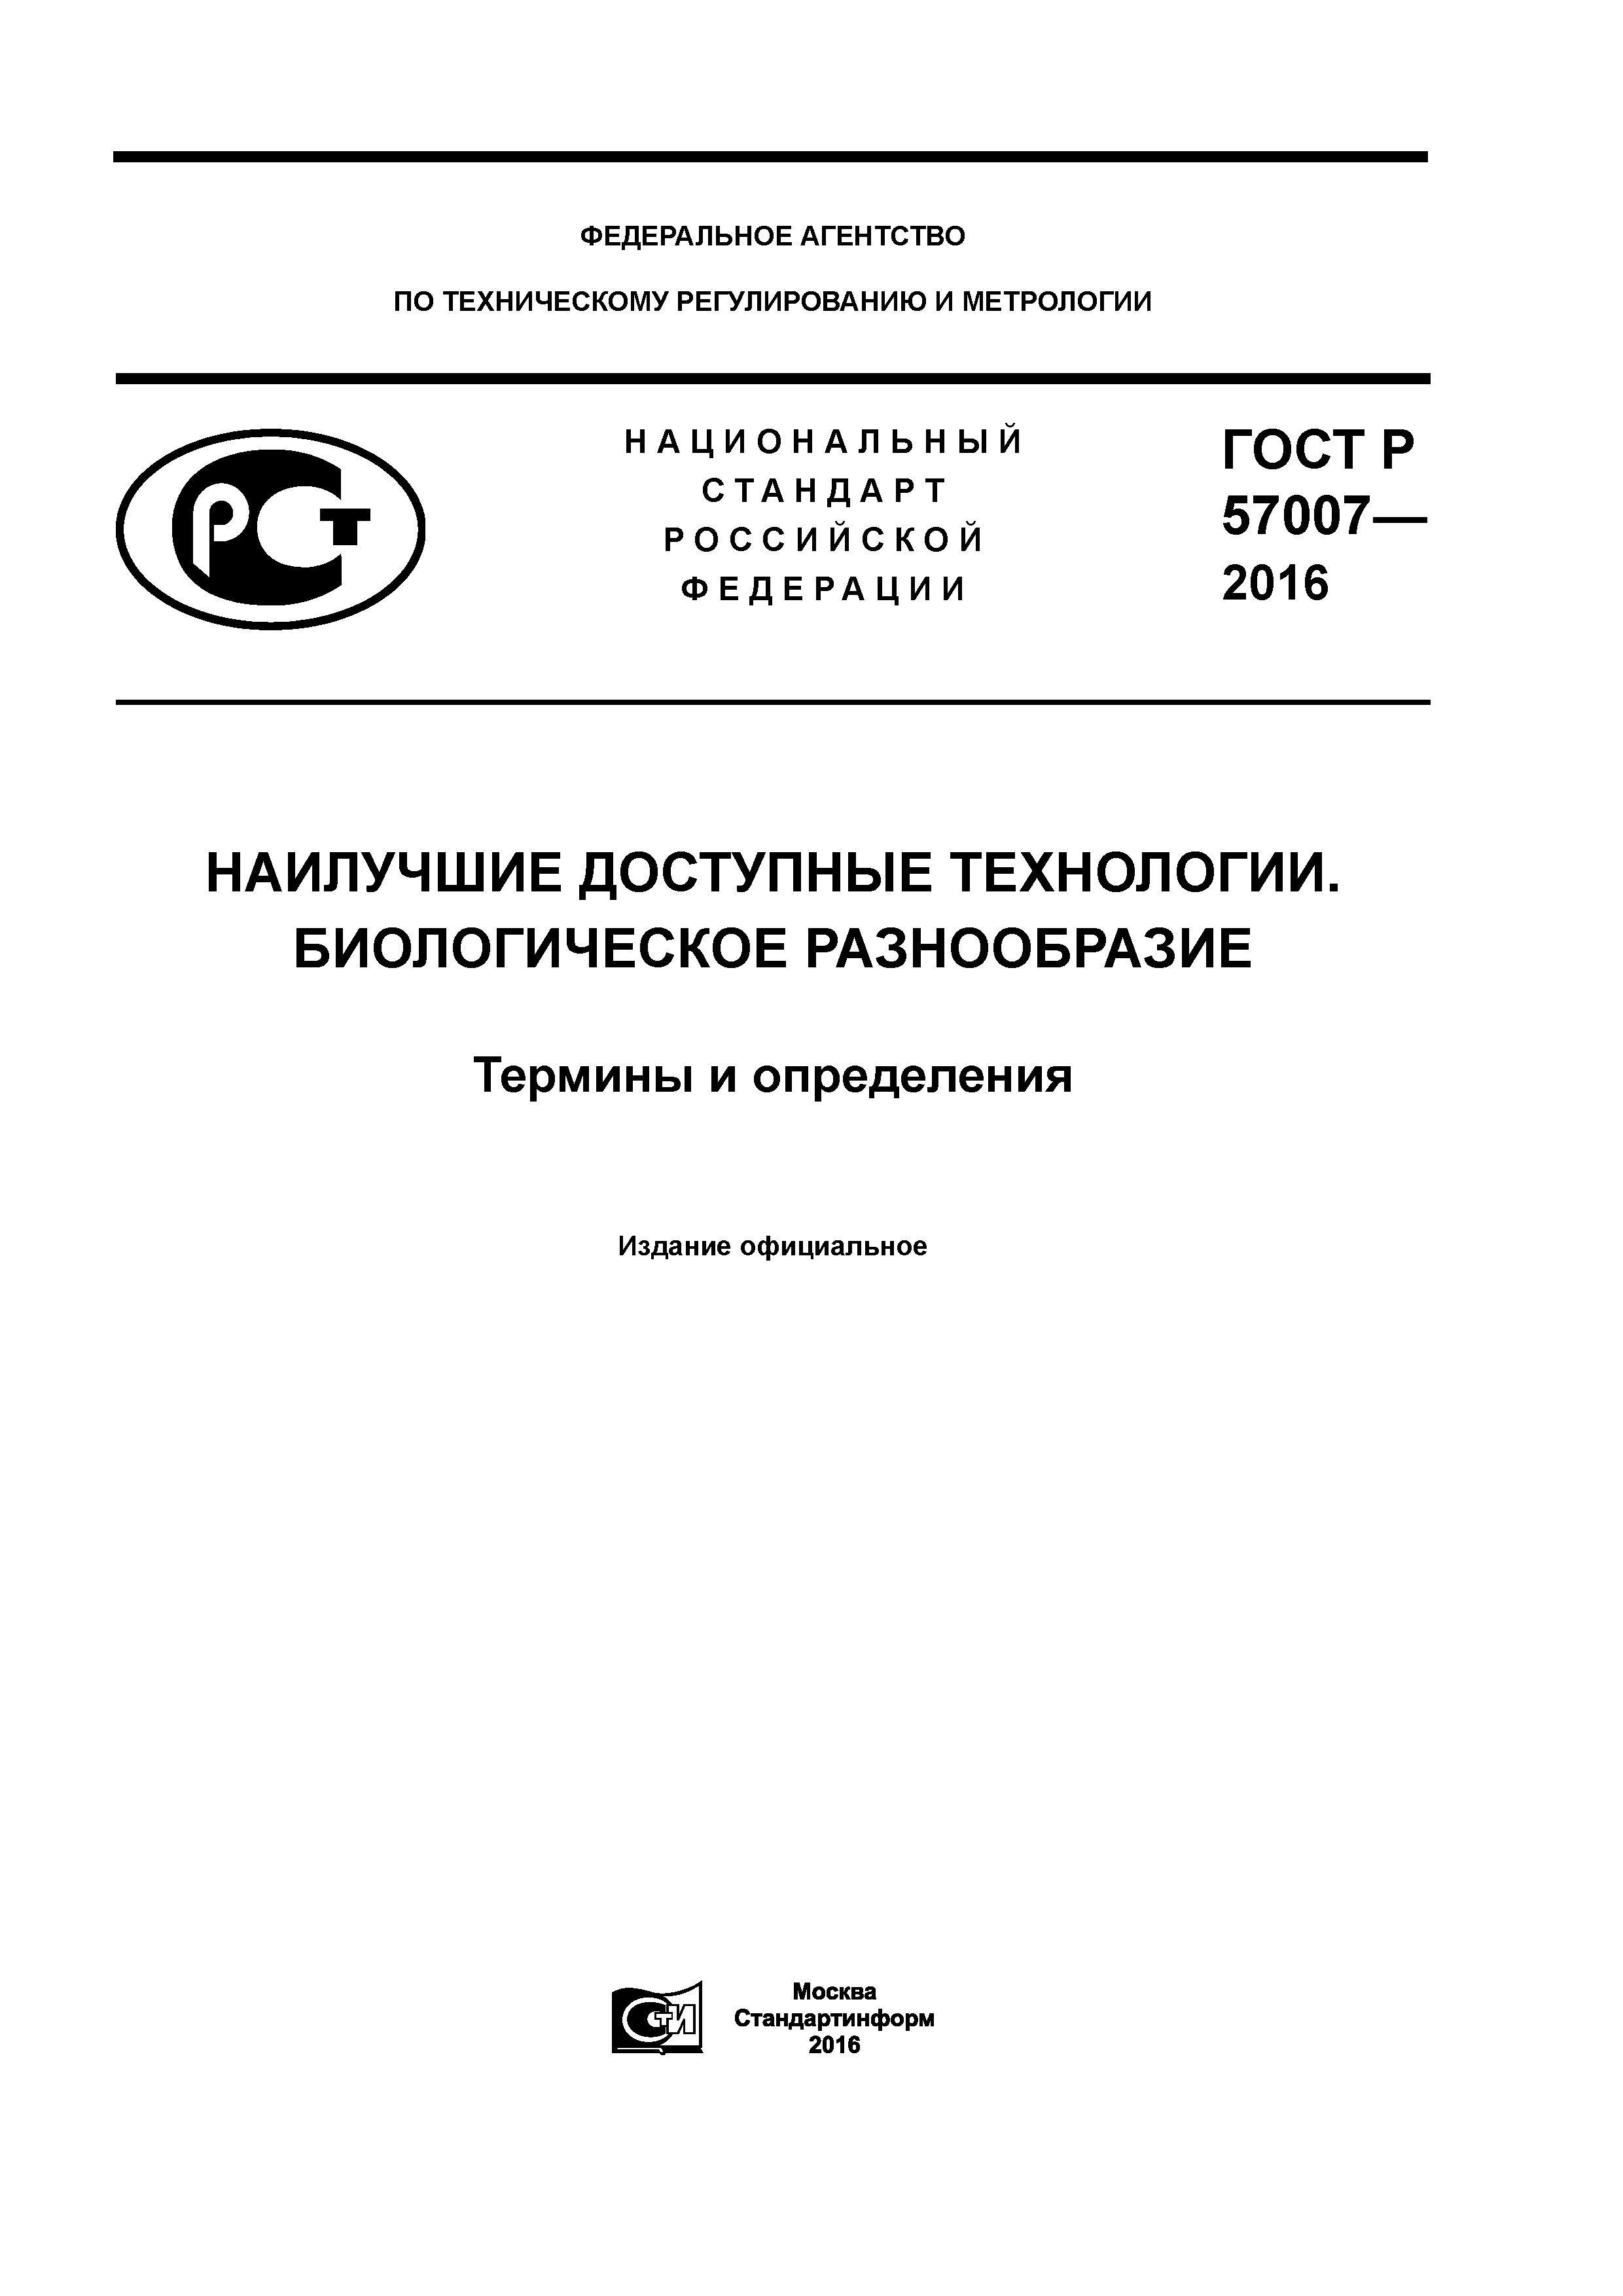 ГОСТ Р 57007-2016